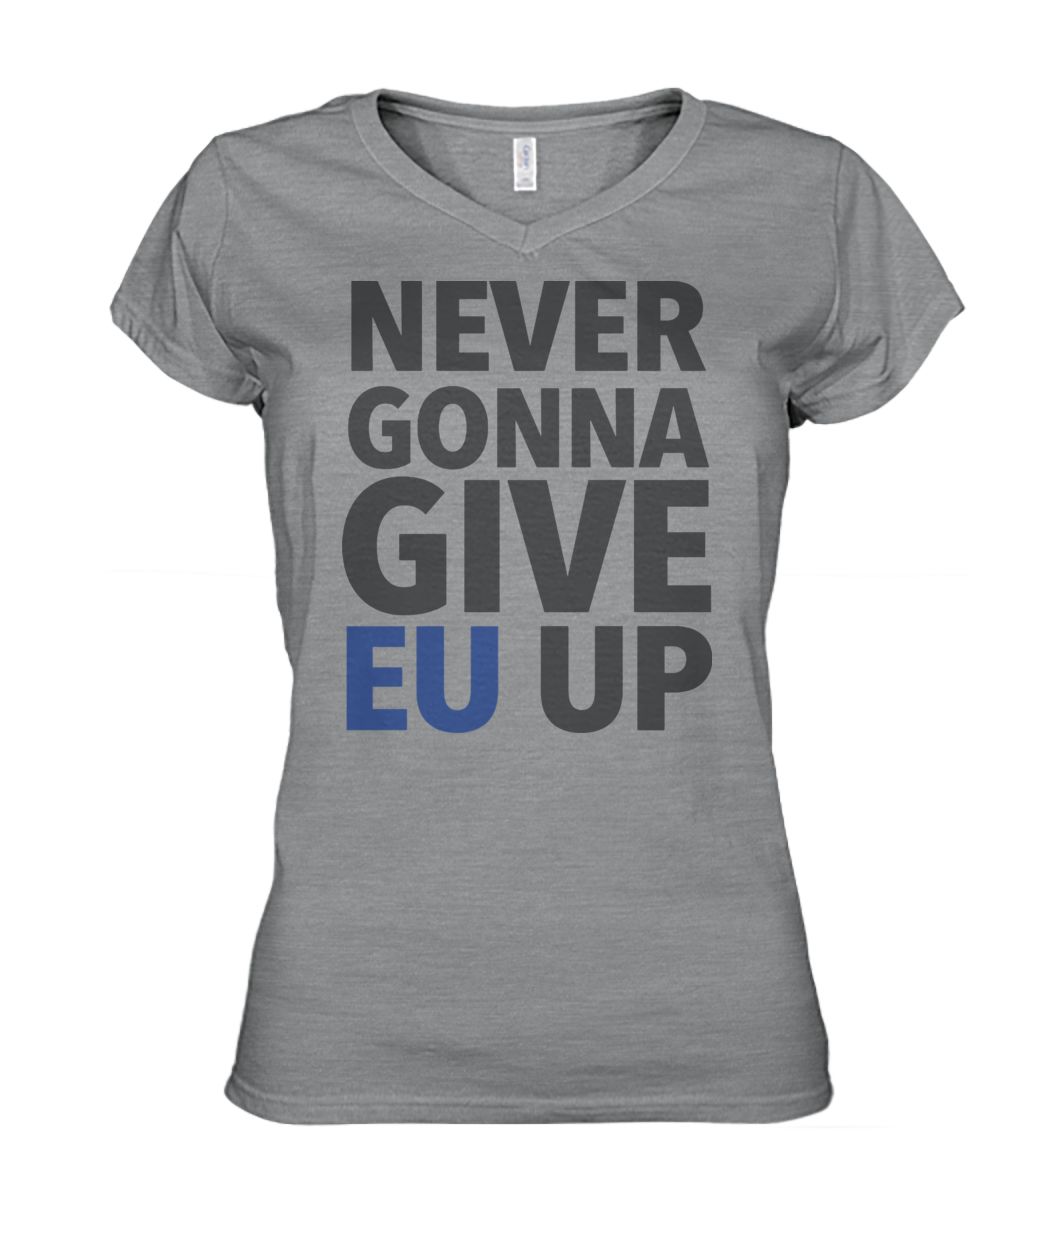 Never gonna give EU up women's v-neck